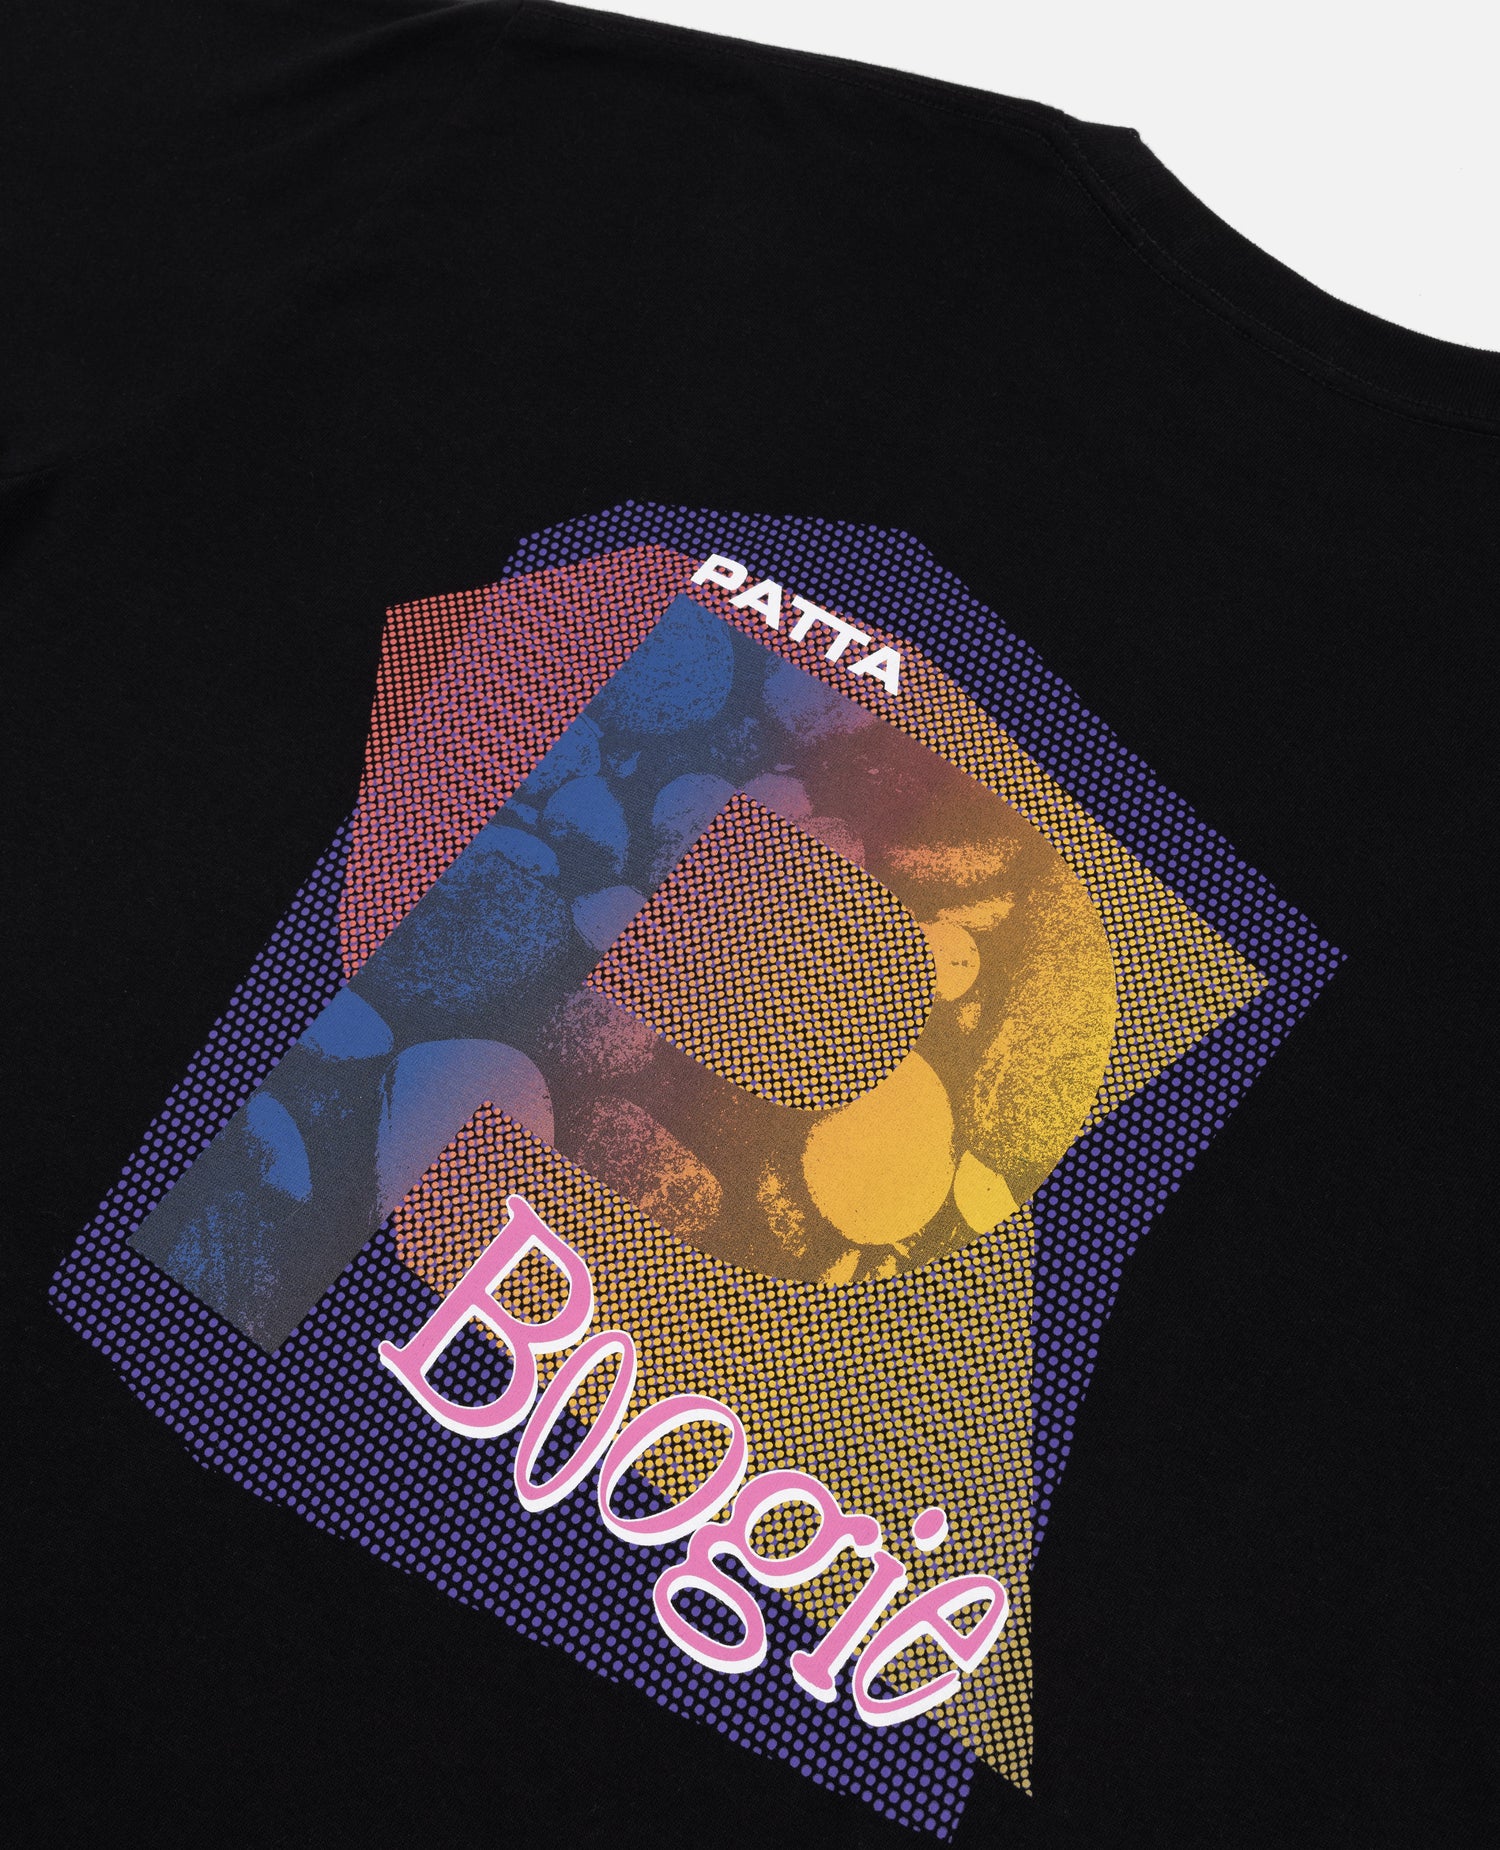 Patta Boogie T-Shirt (Black)